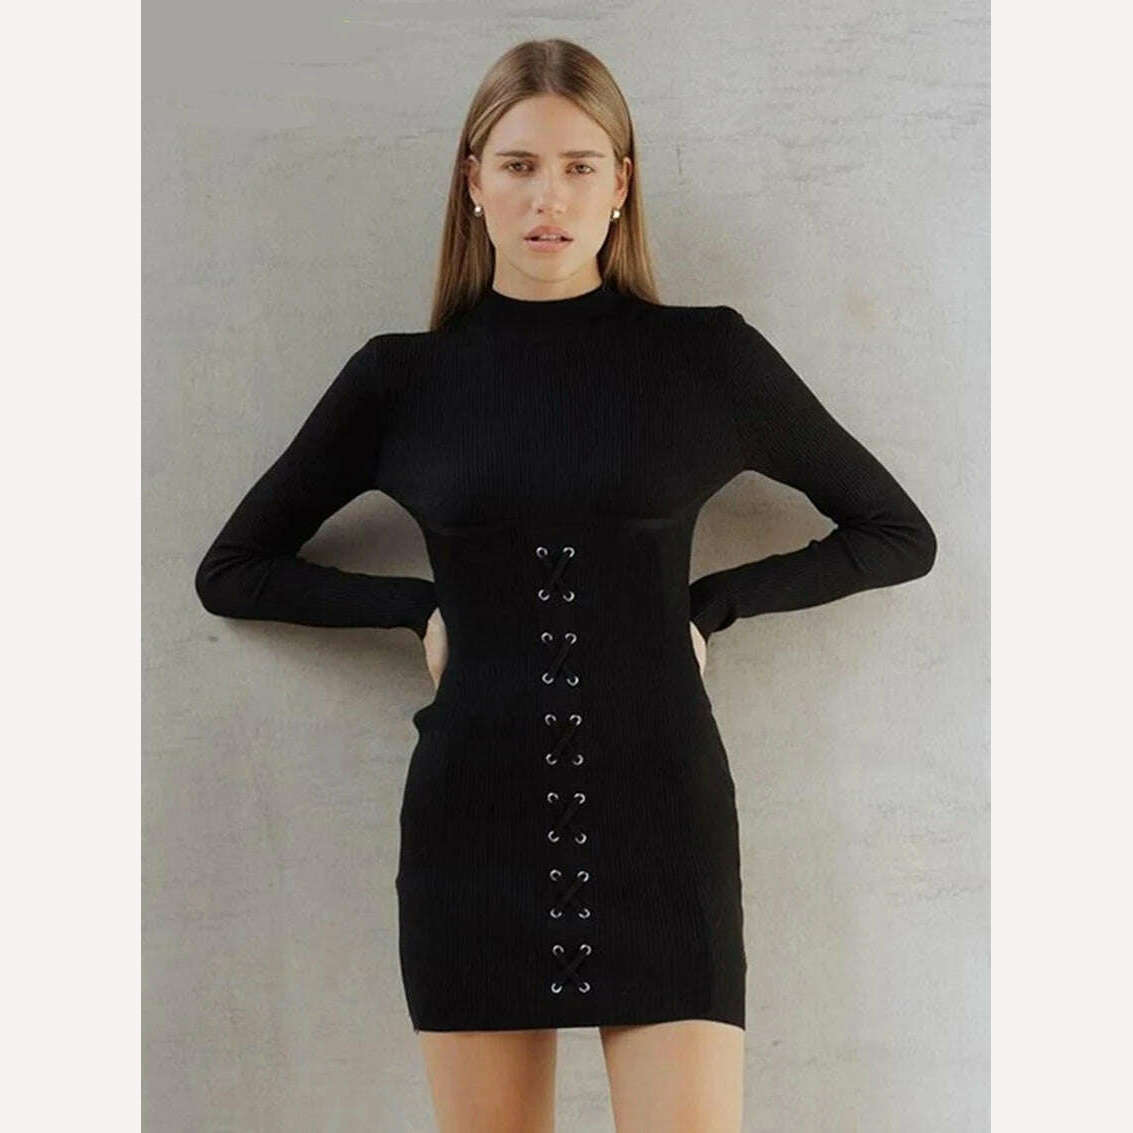 KIMLUD, Clacive Bodycon Black Knitted Women'S Dress 2024 Fashion Stand Collar Long Sleeve Mini Dresses Elegant Slim Bandage Female Dress, KIMLUD Women's Clothes